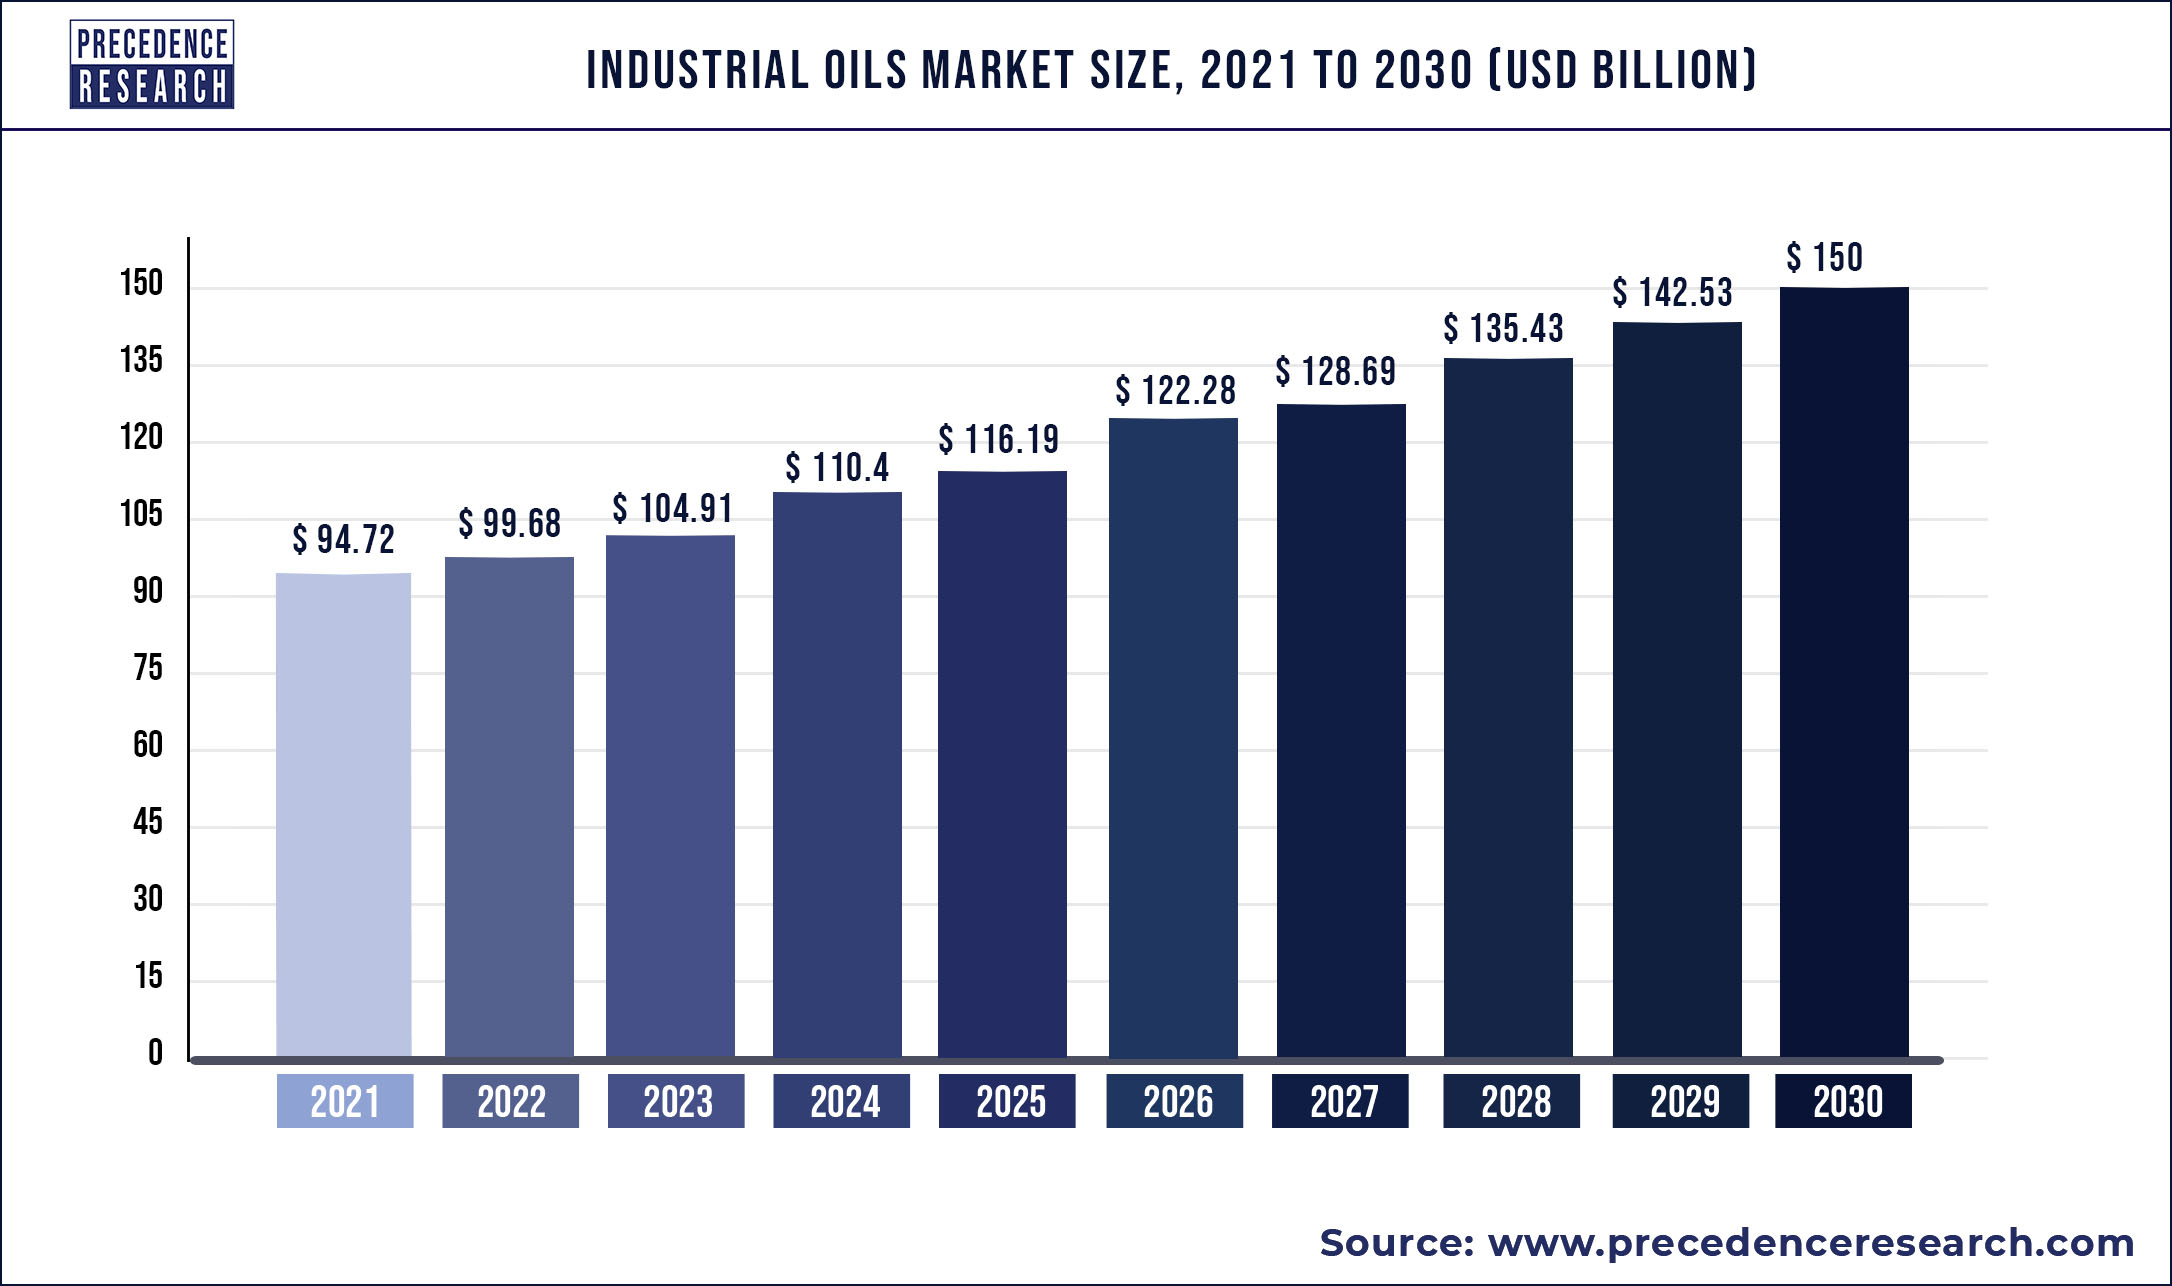 Industrial Oils